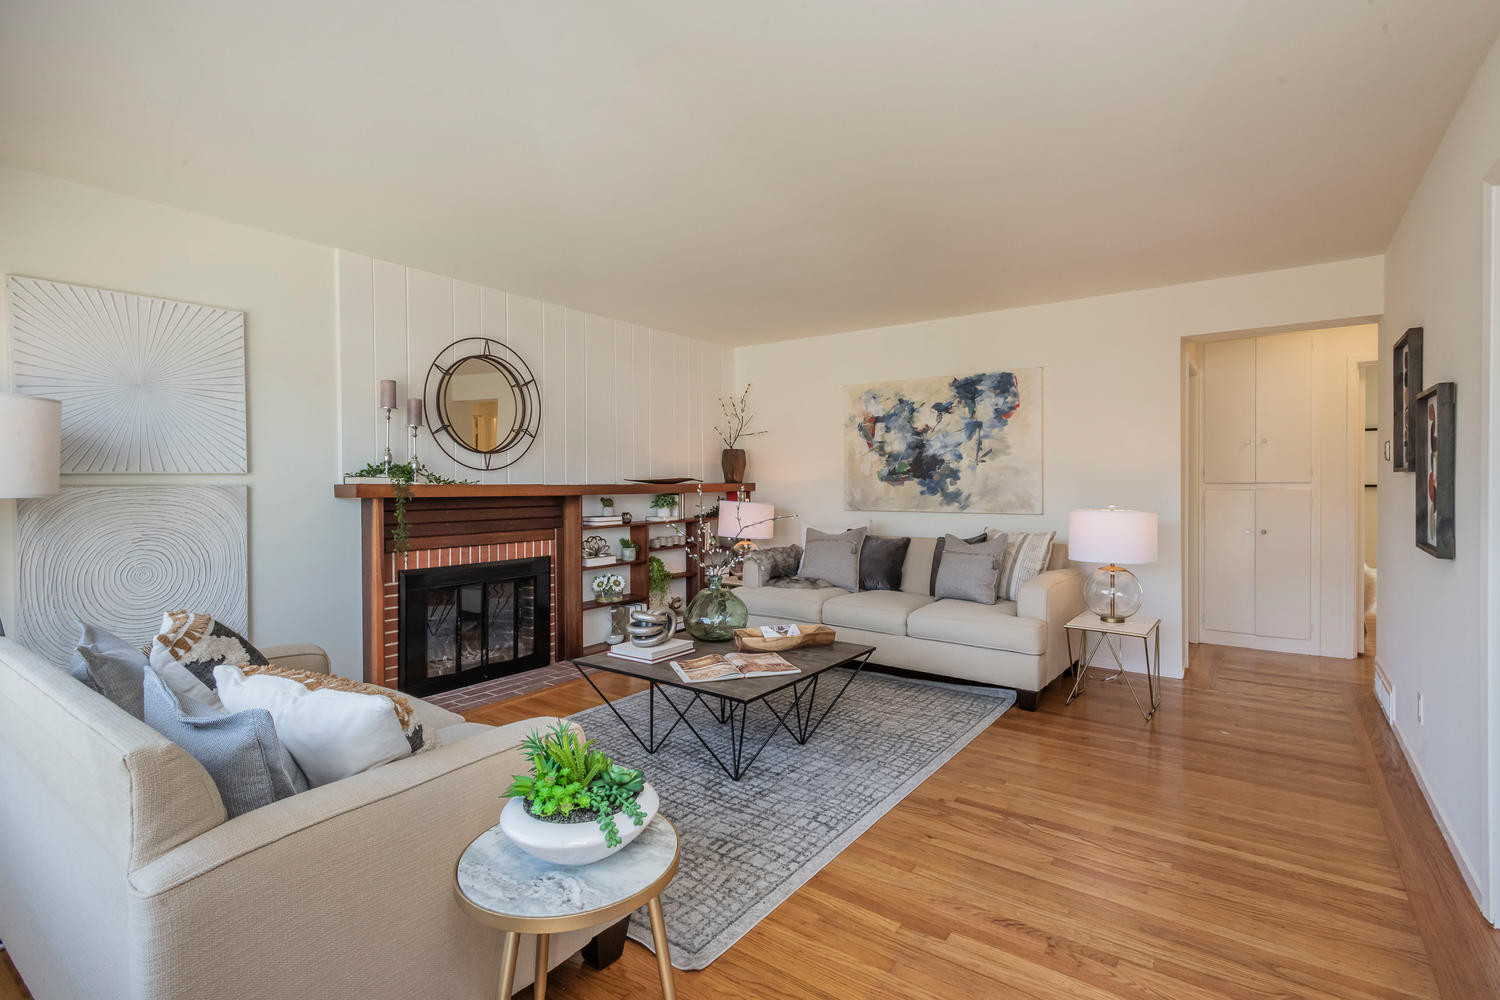 1285 Edgewood Way Living Room in Sunshine Gardens Neighborhood in South San Francisco.